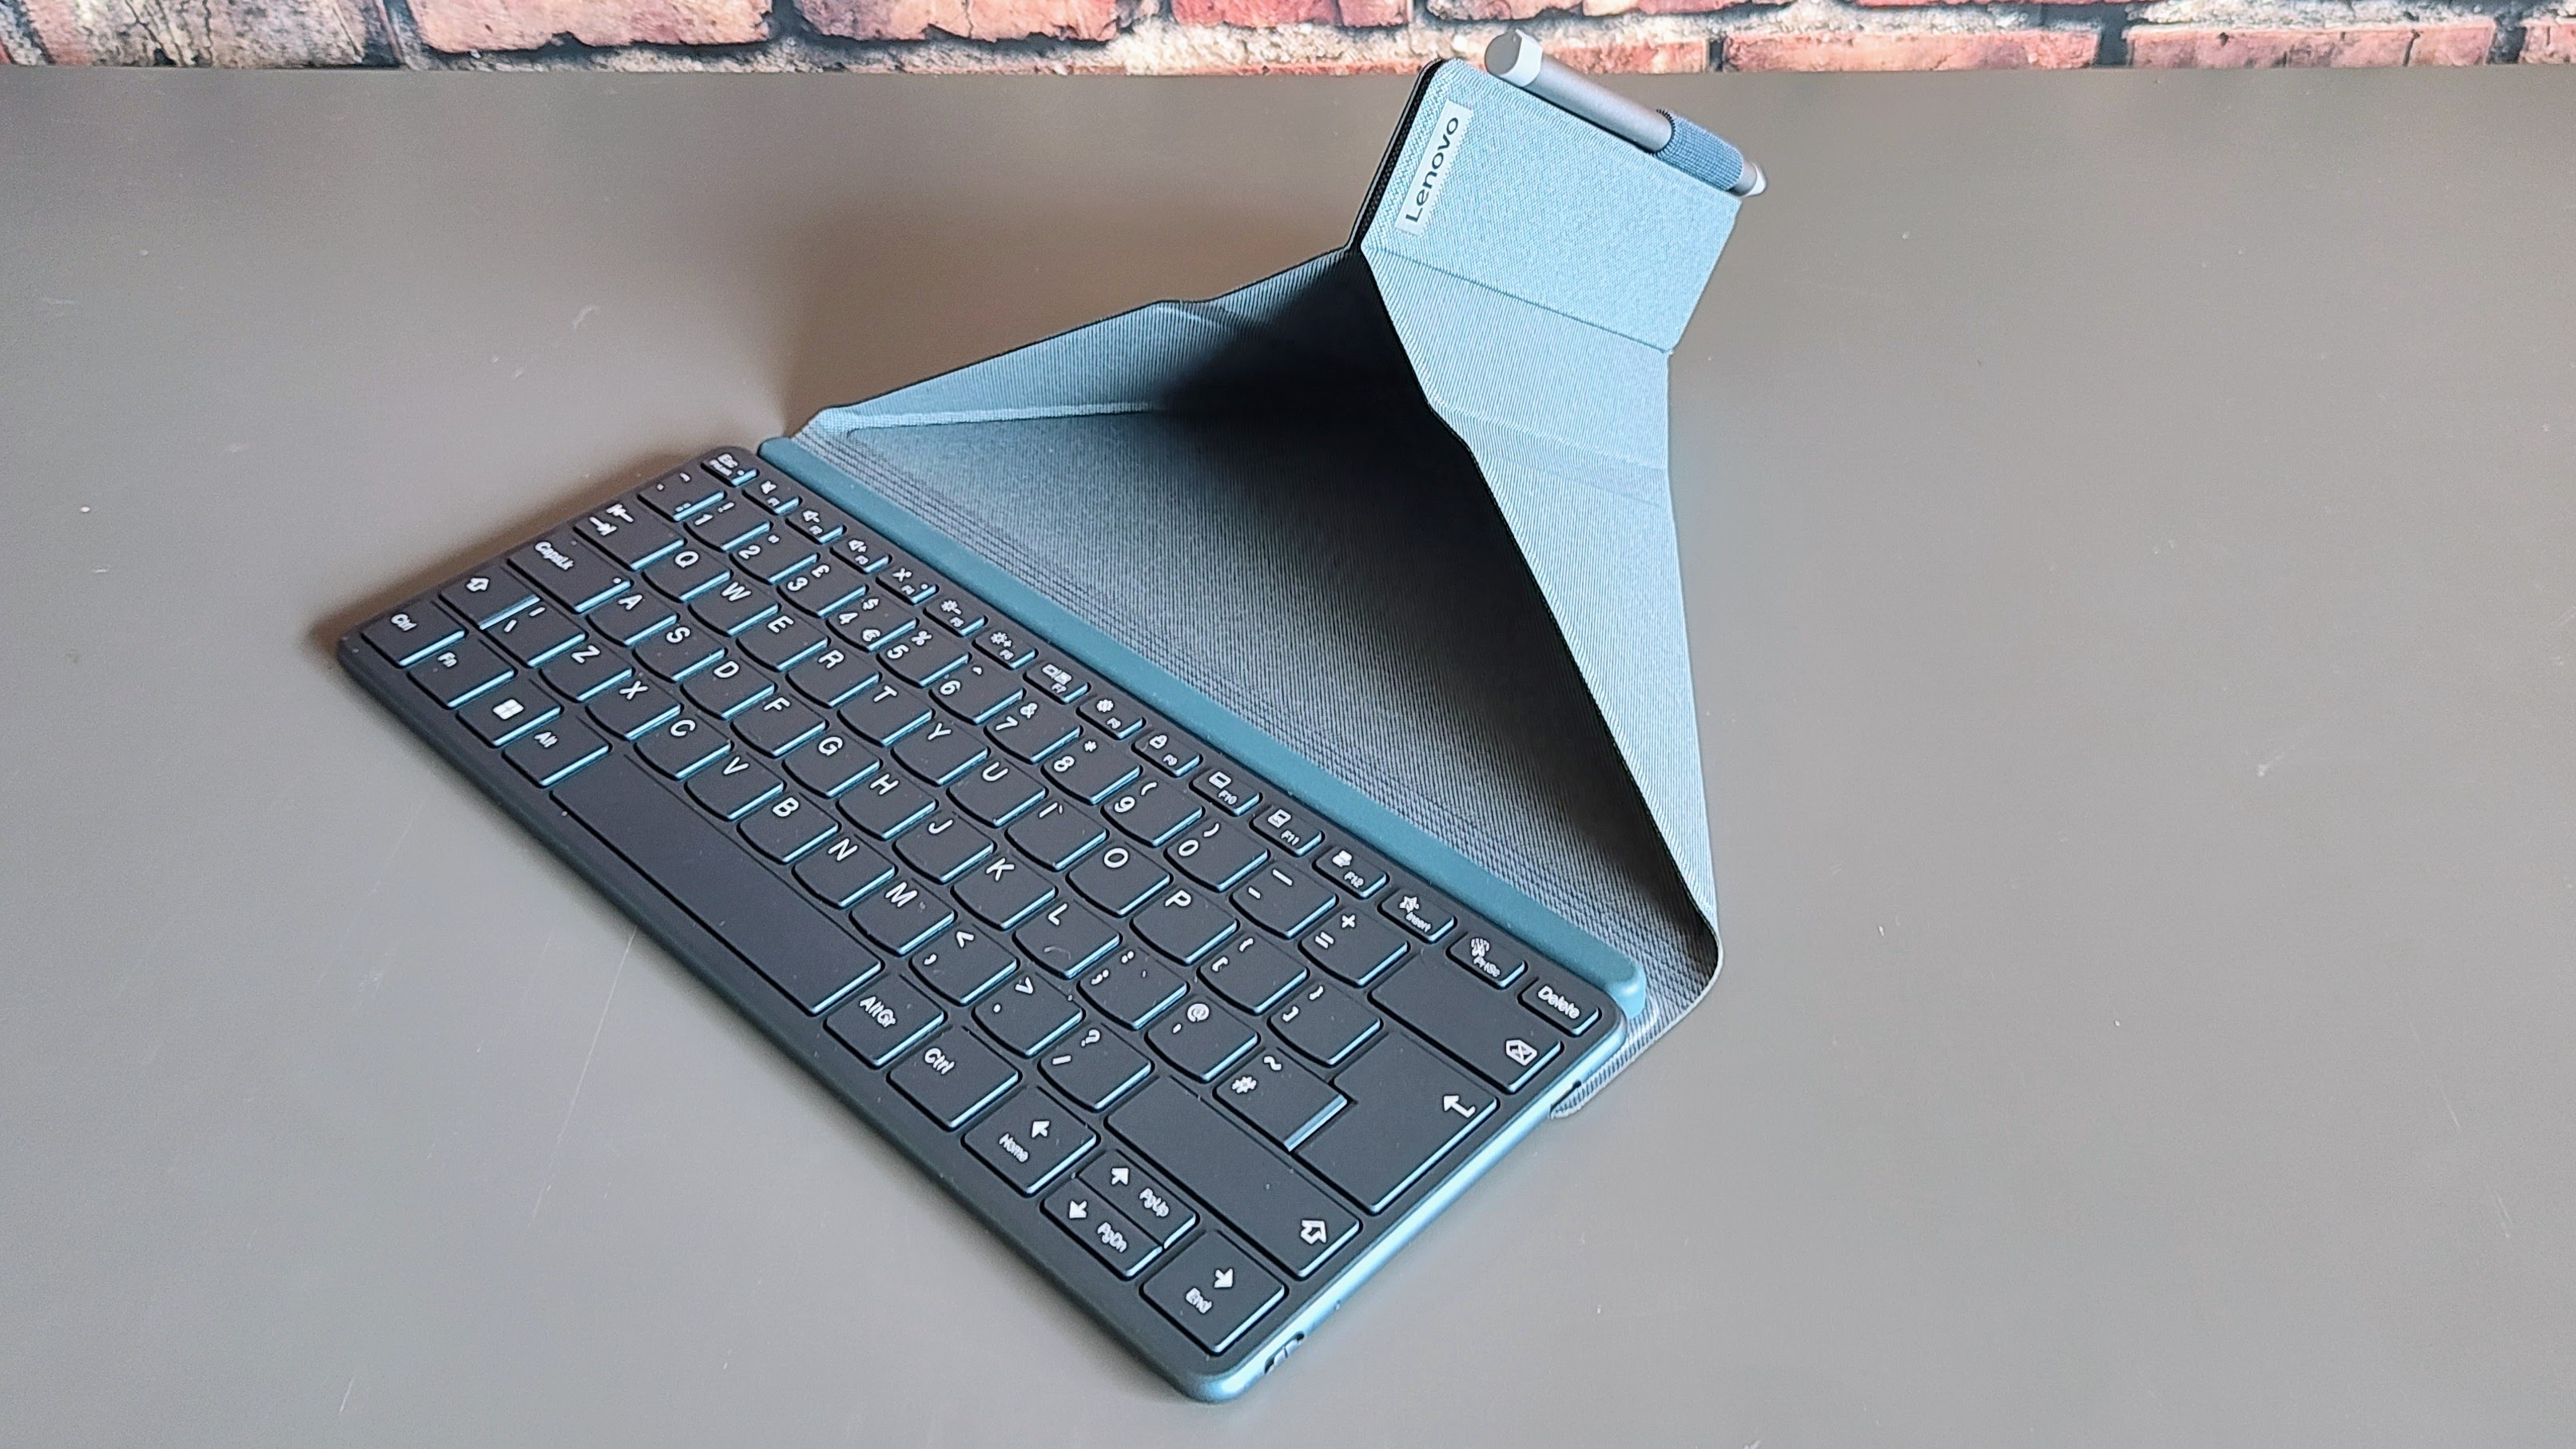 The Lenovo Yoga Book 9i's keyboard stand